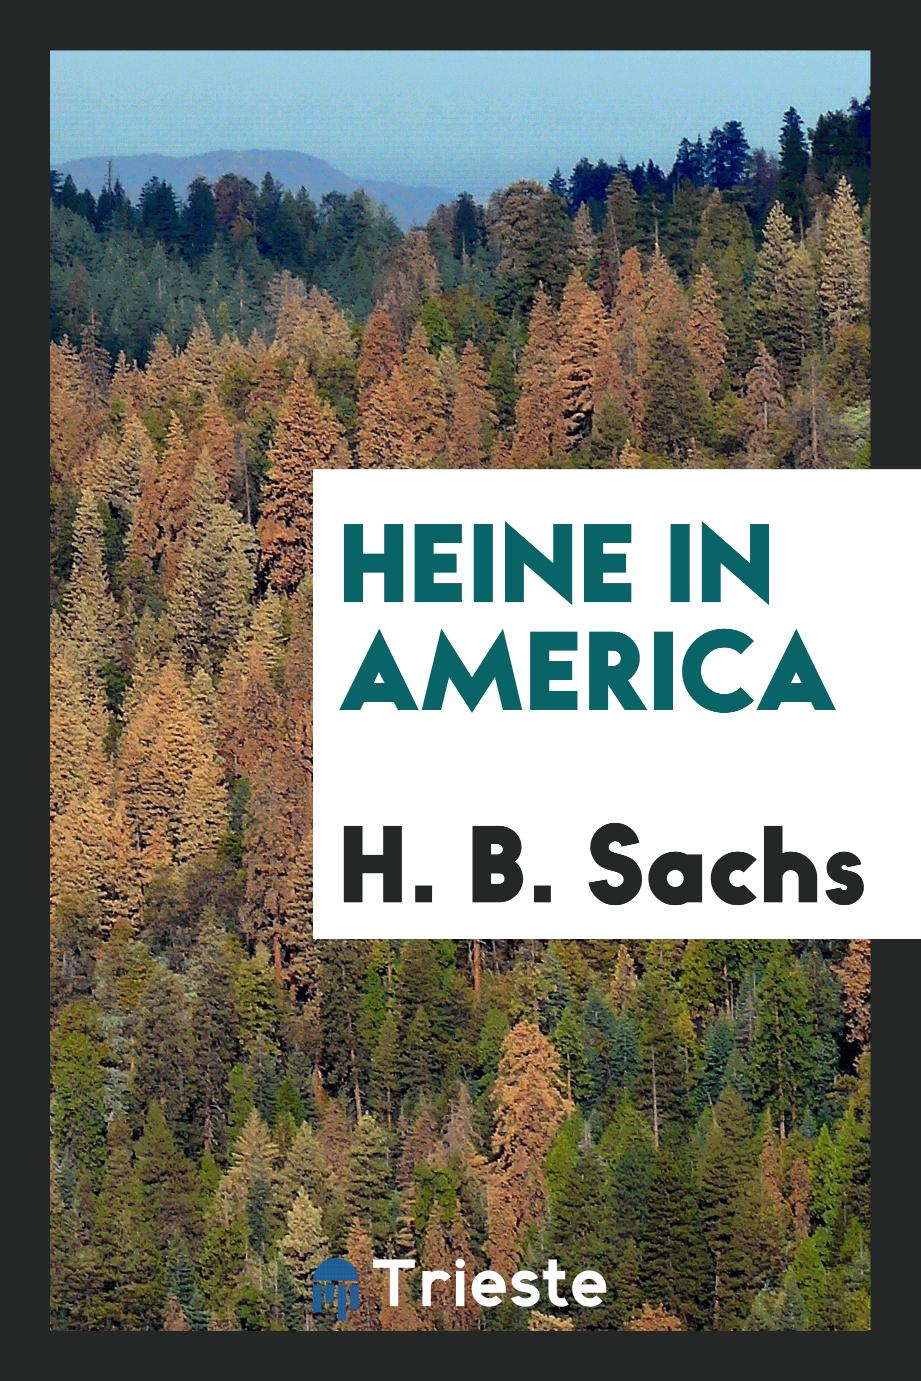 Heine in America